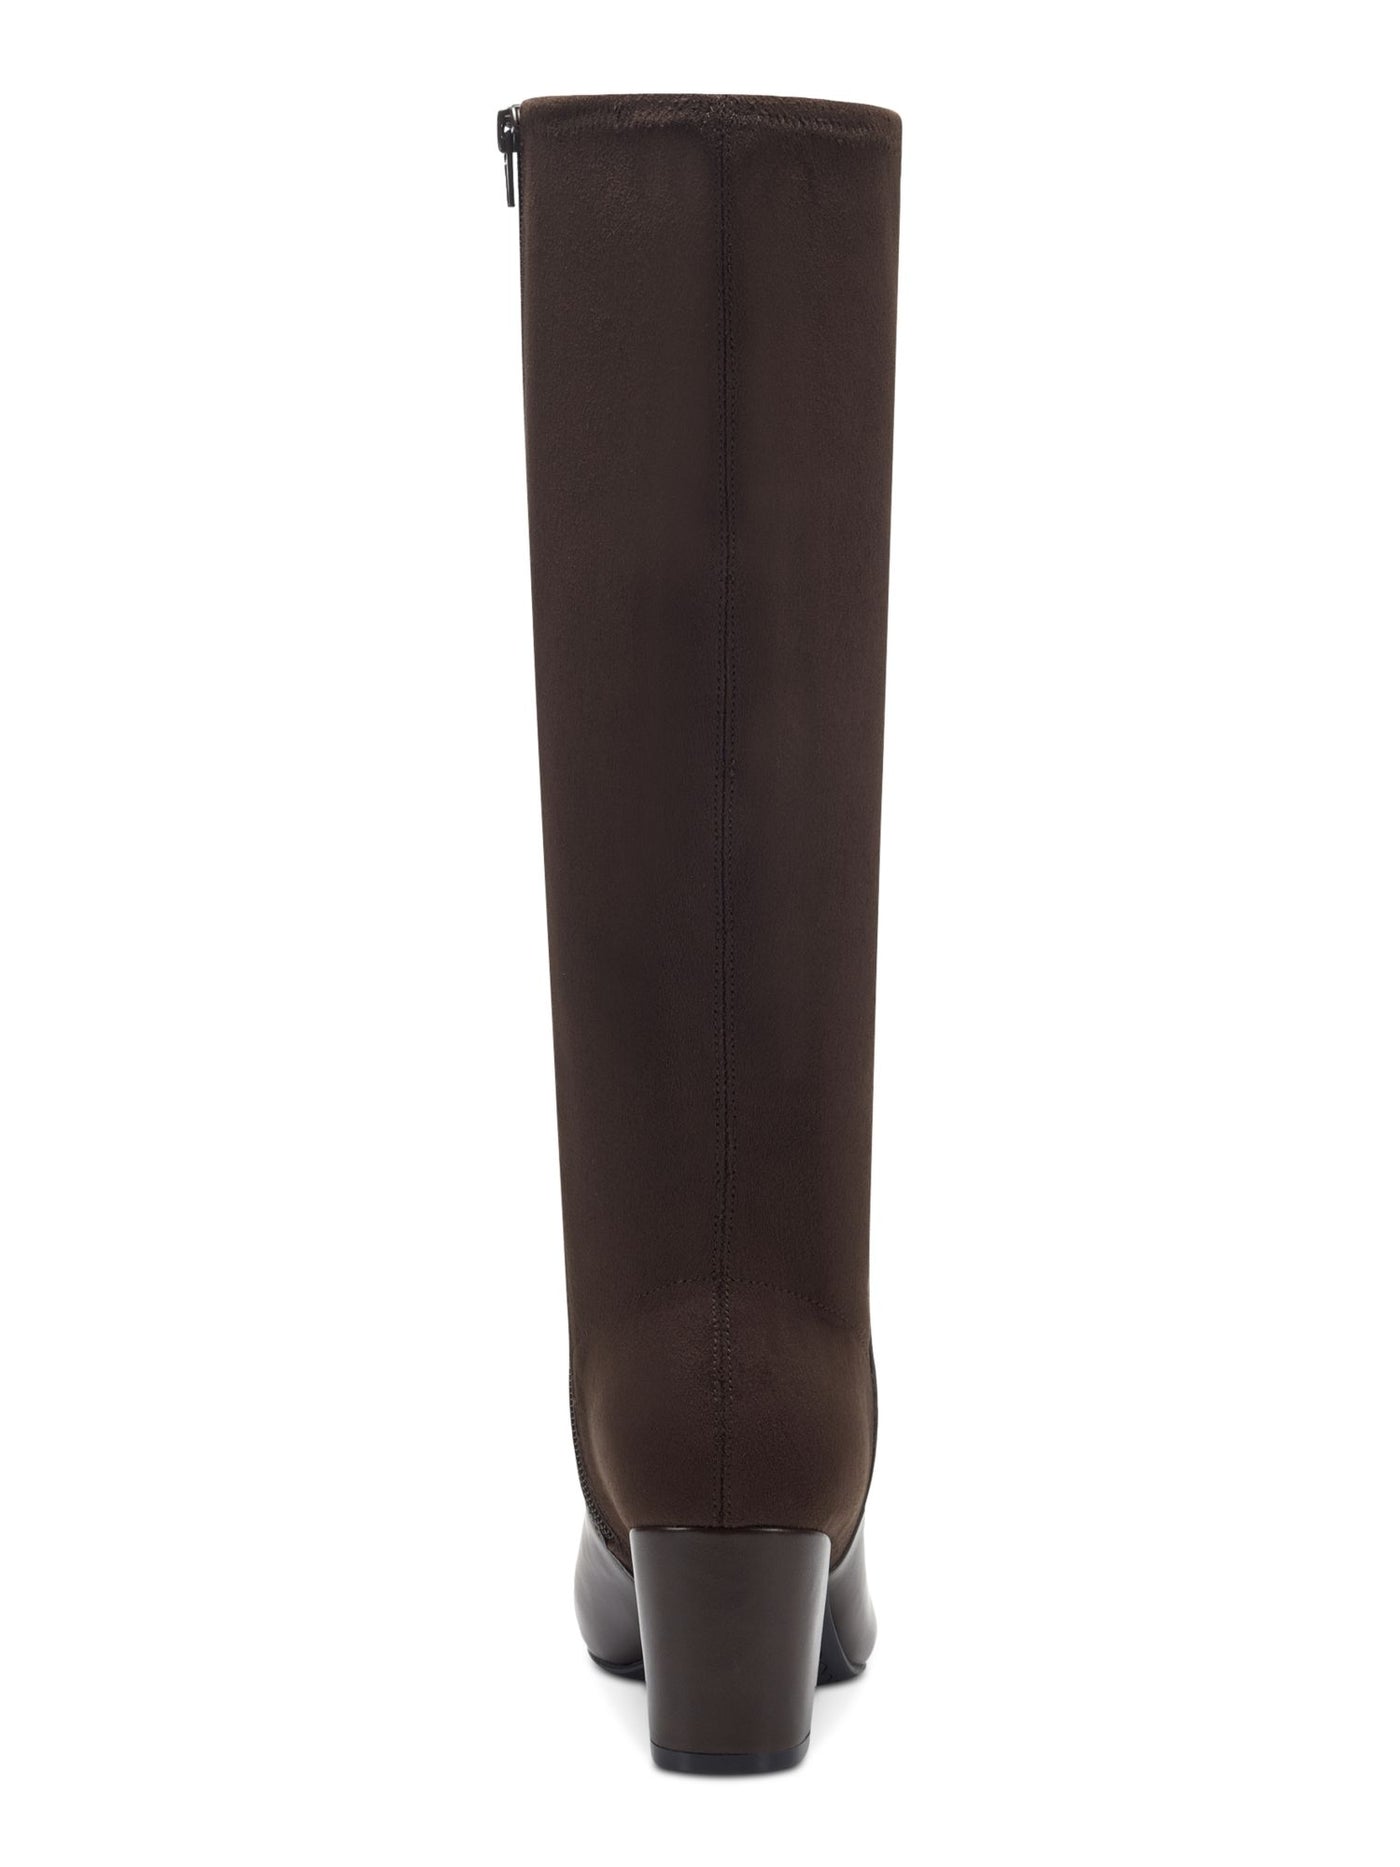 CHARTER CLUB Womens Chocolate Brown Mixed Media Cushioned Sacaria Almond Toe Block Heel Zip-Up Dress Boots 8.5 M